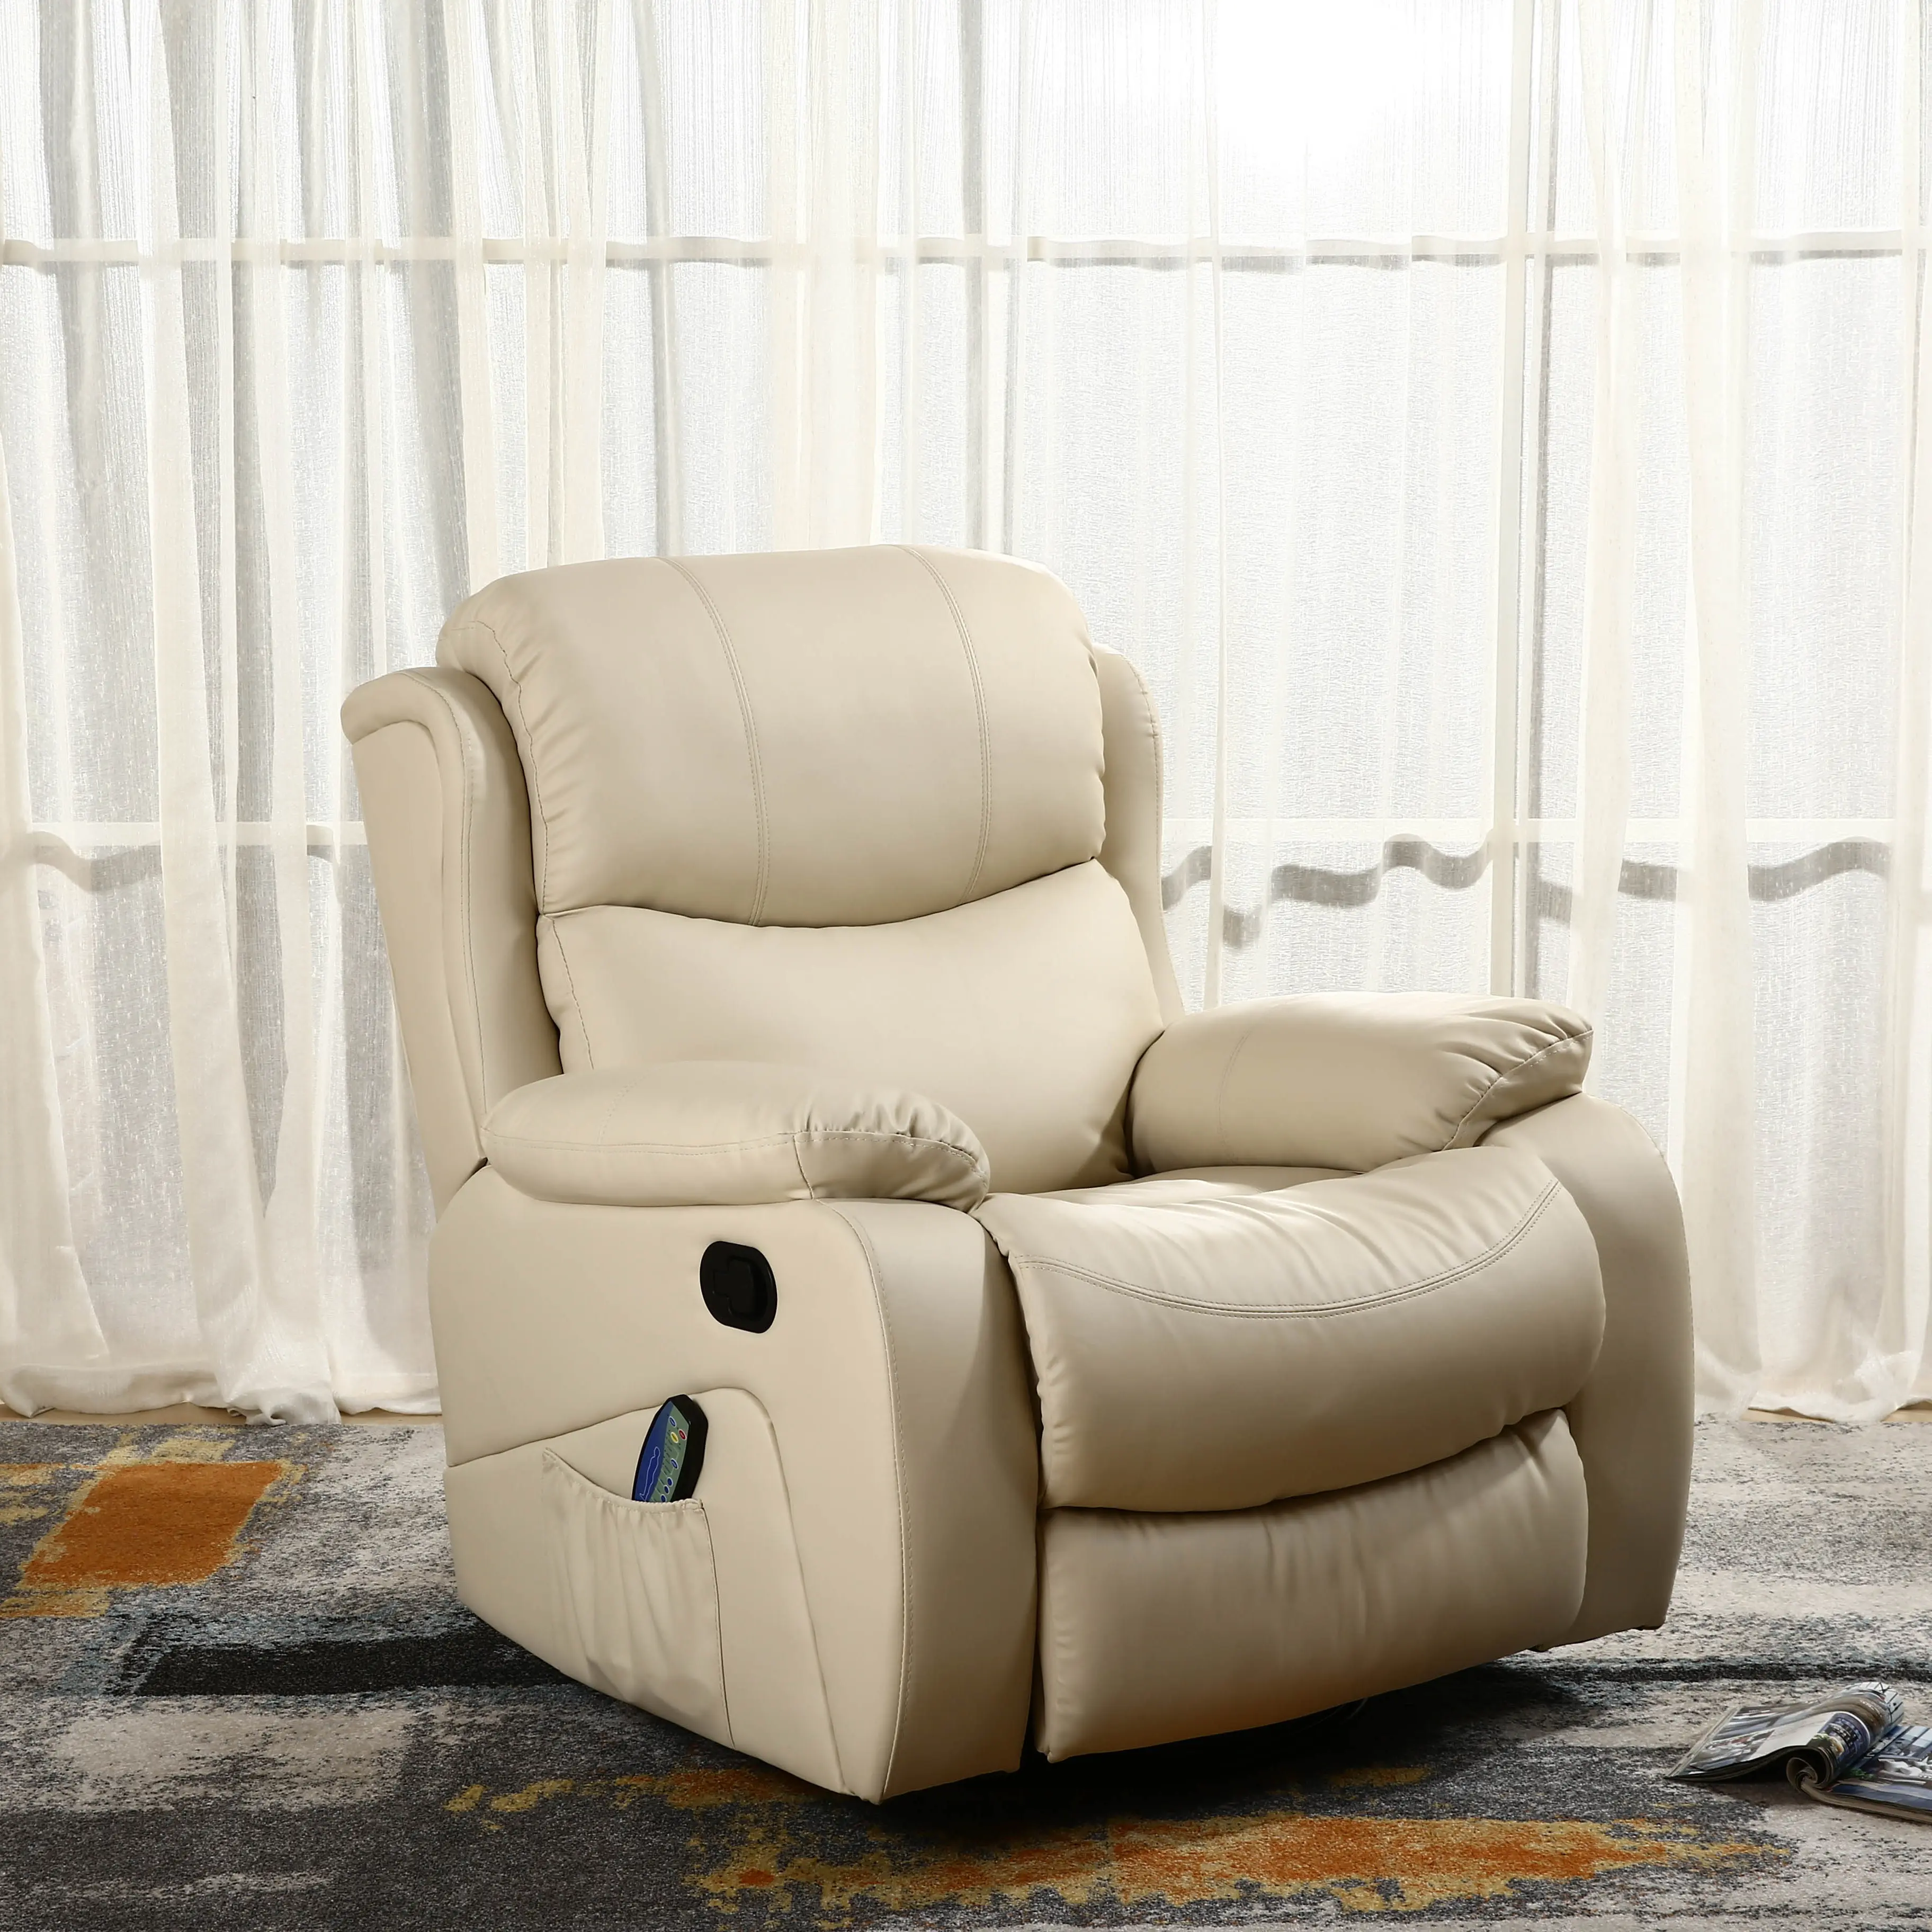 Assento reclinável dobrável para cinema, assento reclinável para home theater, cadeira de massagem barata